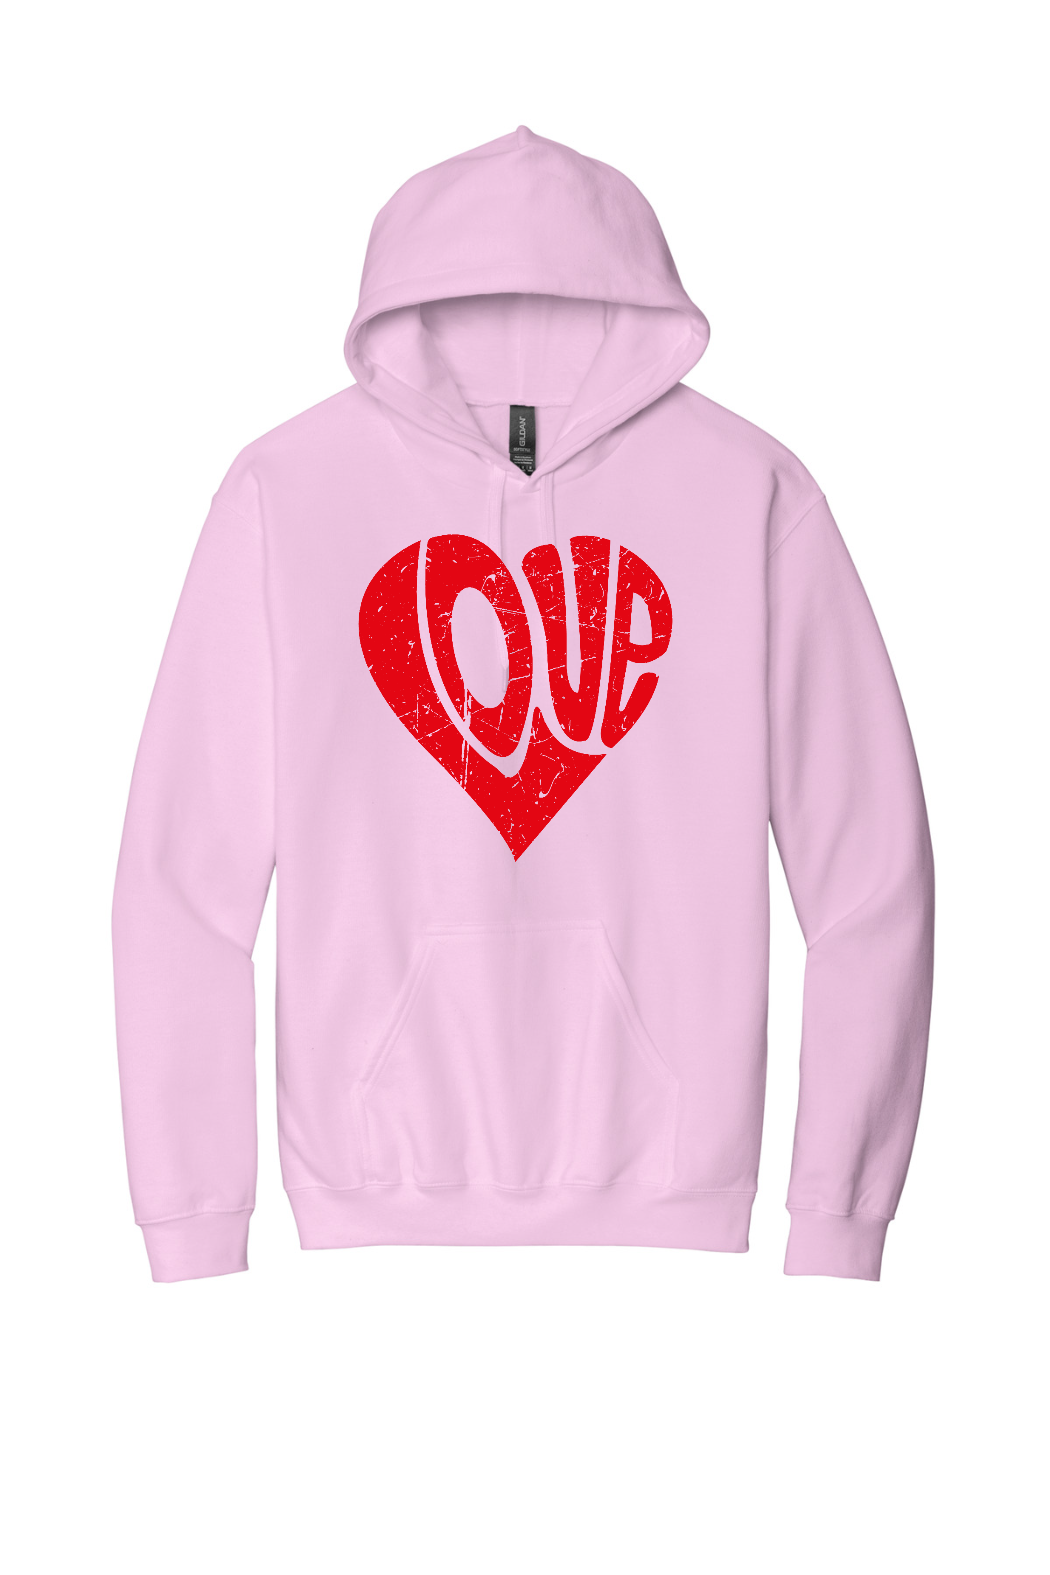 Retro Love Heart, Valentine's Day, Hooded Sweatshirt